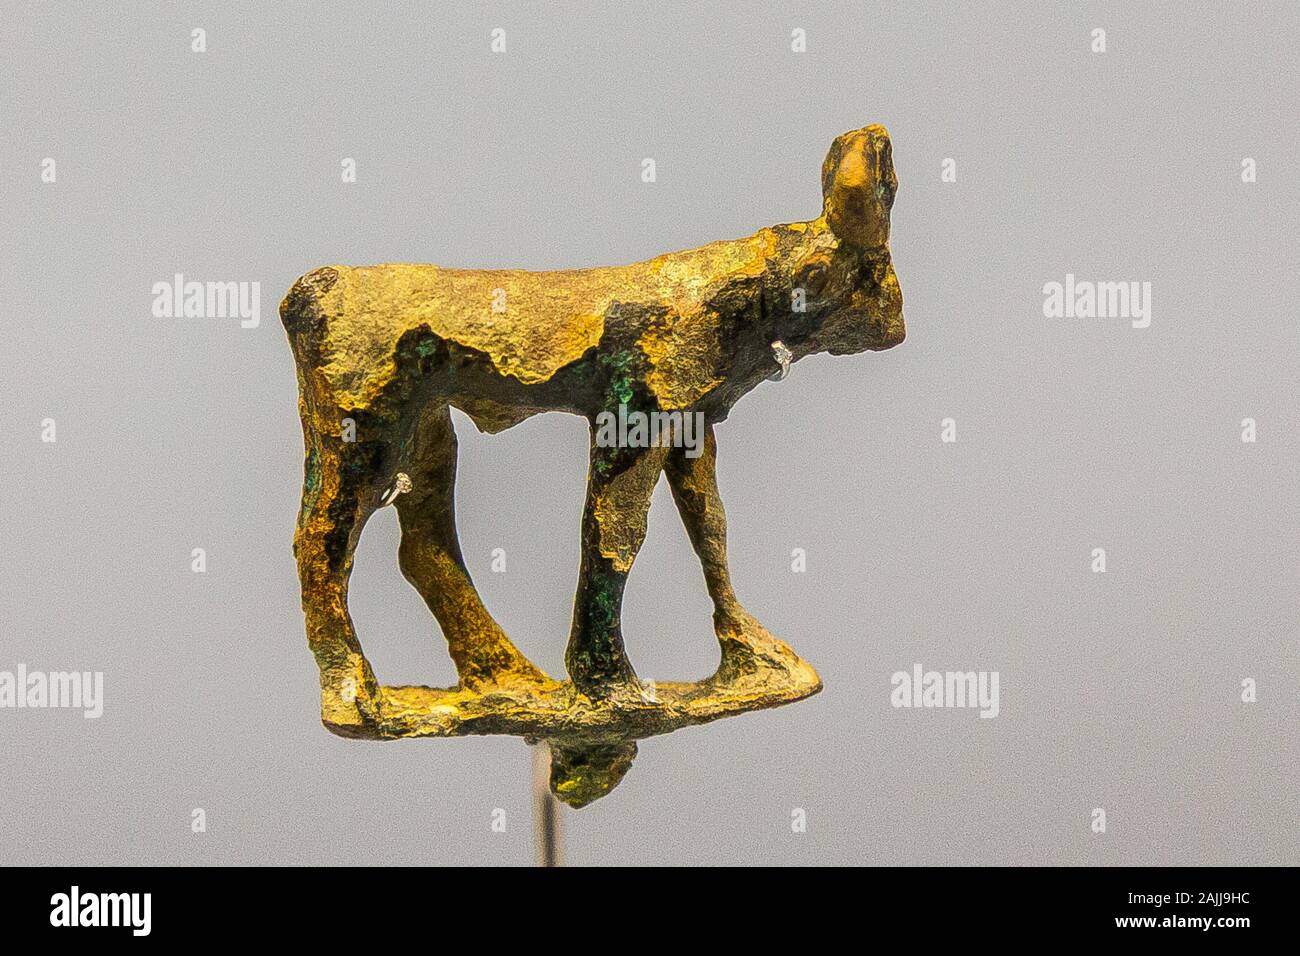 Photo taken during the opening visit of the exhibition “Osiris, Egypt's Sunken Mysteries”. Foundation deposit, small emblem of Apis bull. Stock Photo